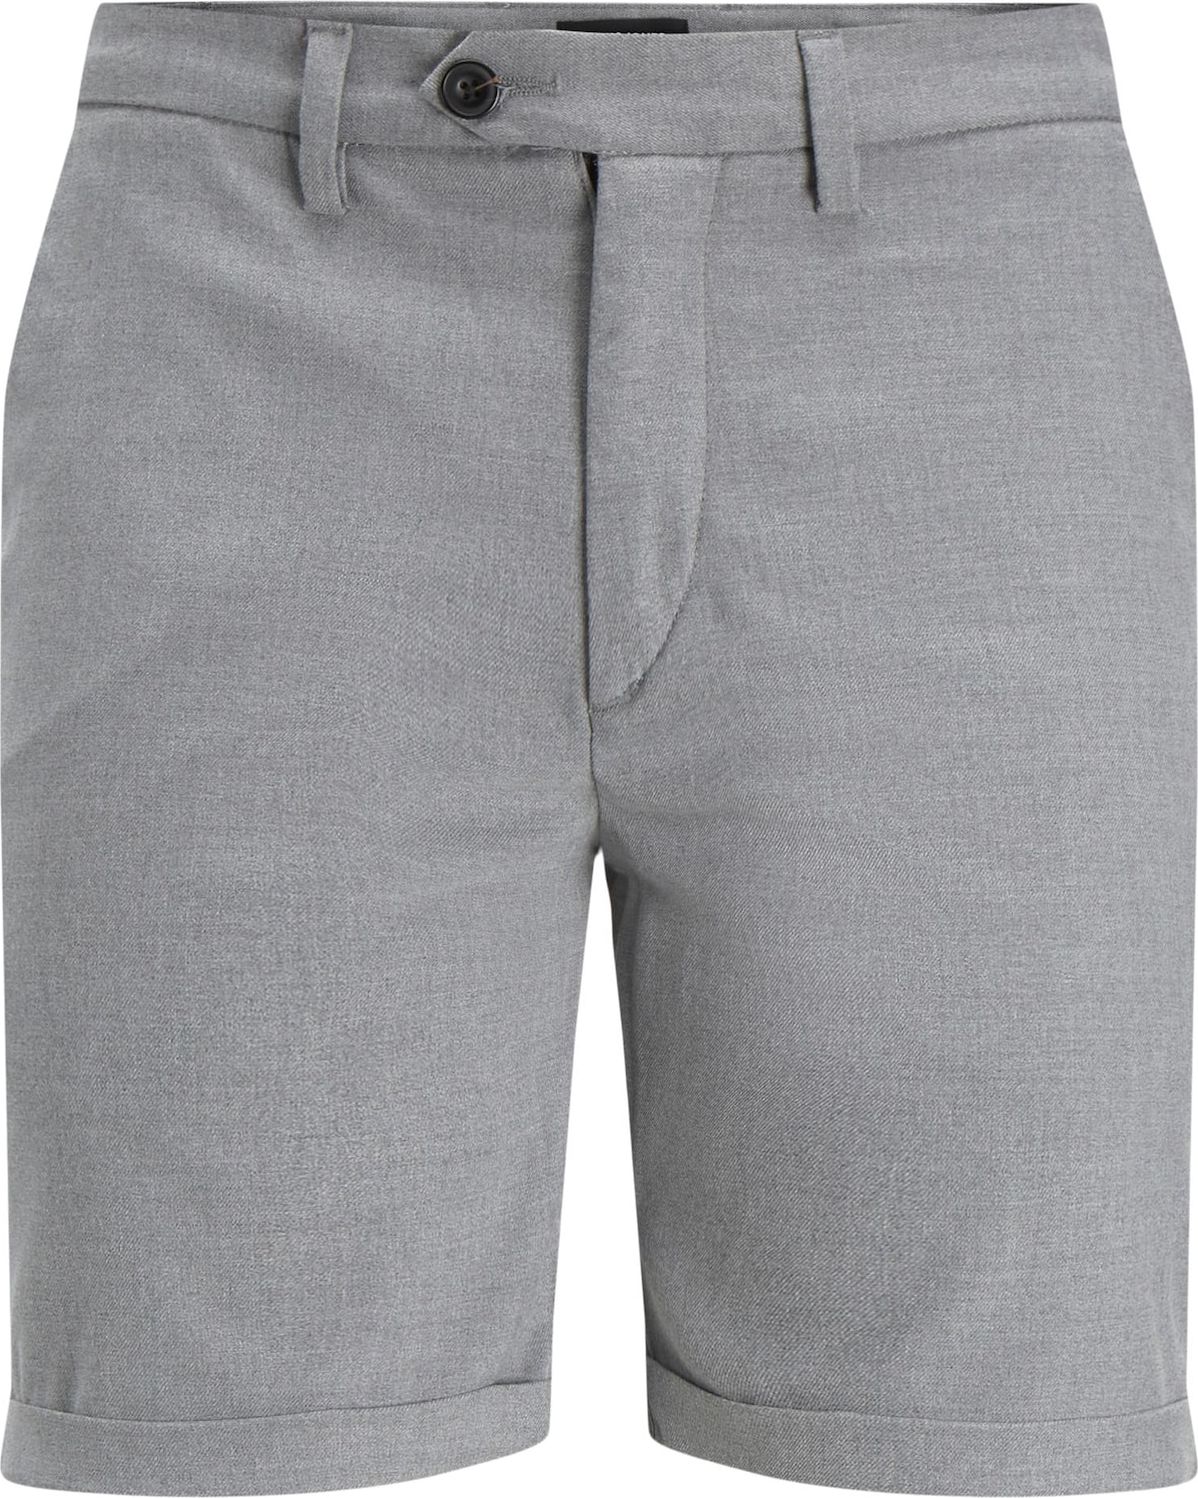 JACK & JONES Chino kalhoty 'Connor' šedý melír